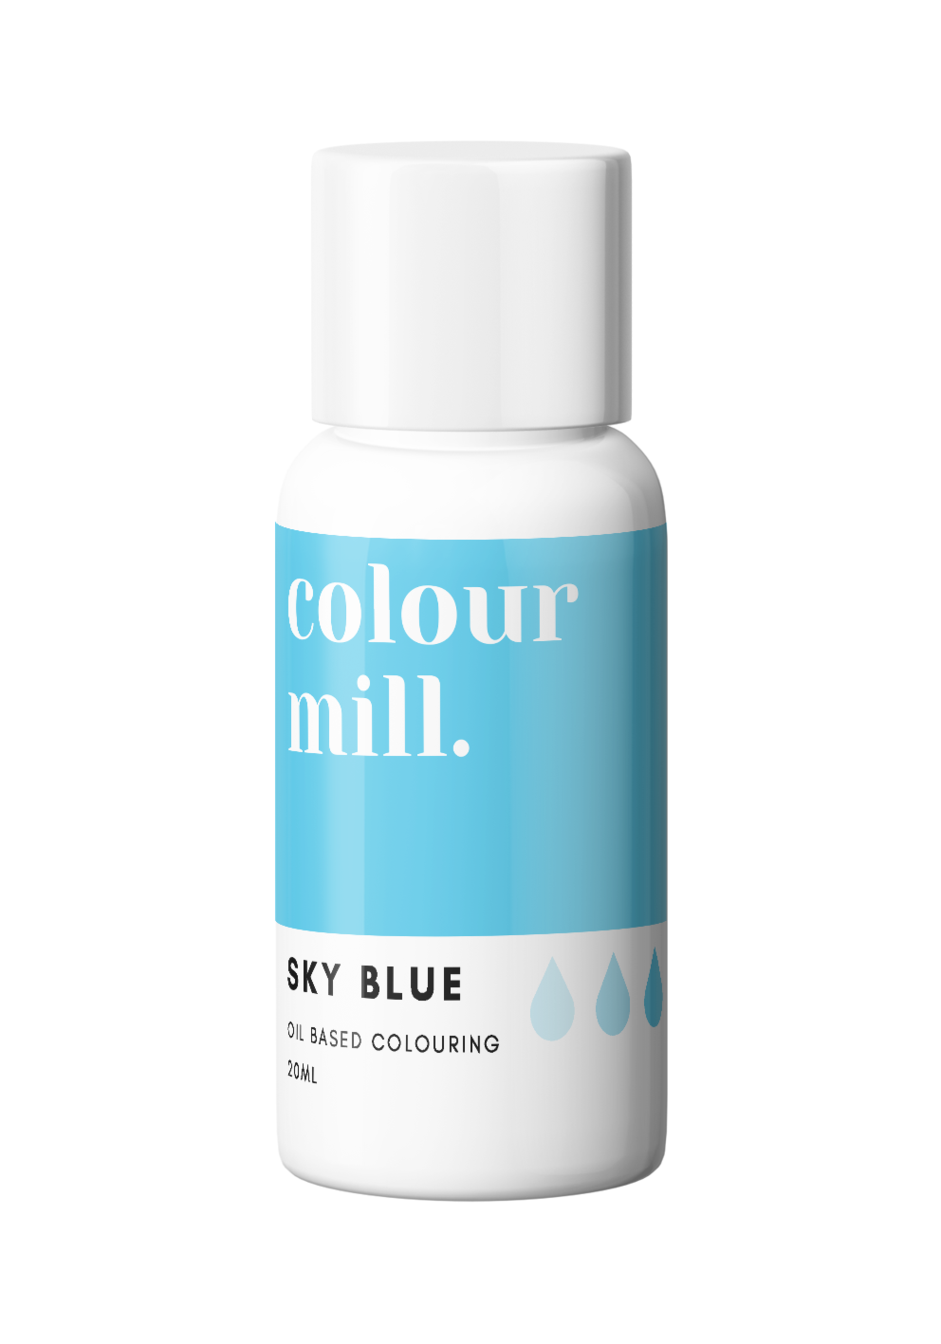 Sky Blue, 20ml, Colour Mill Oil Based Colouring